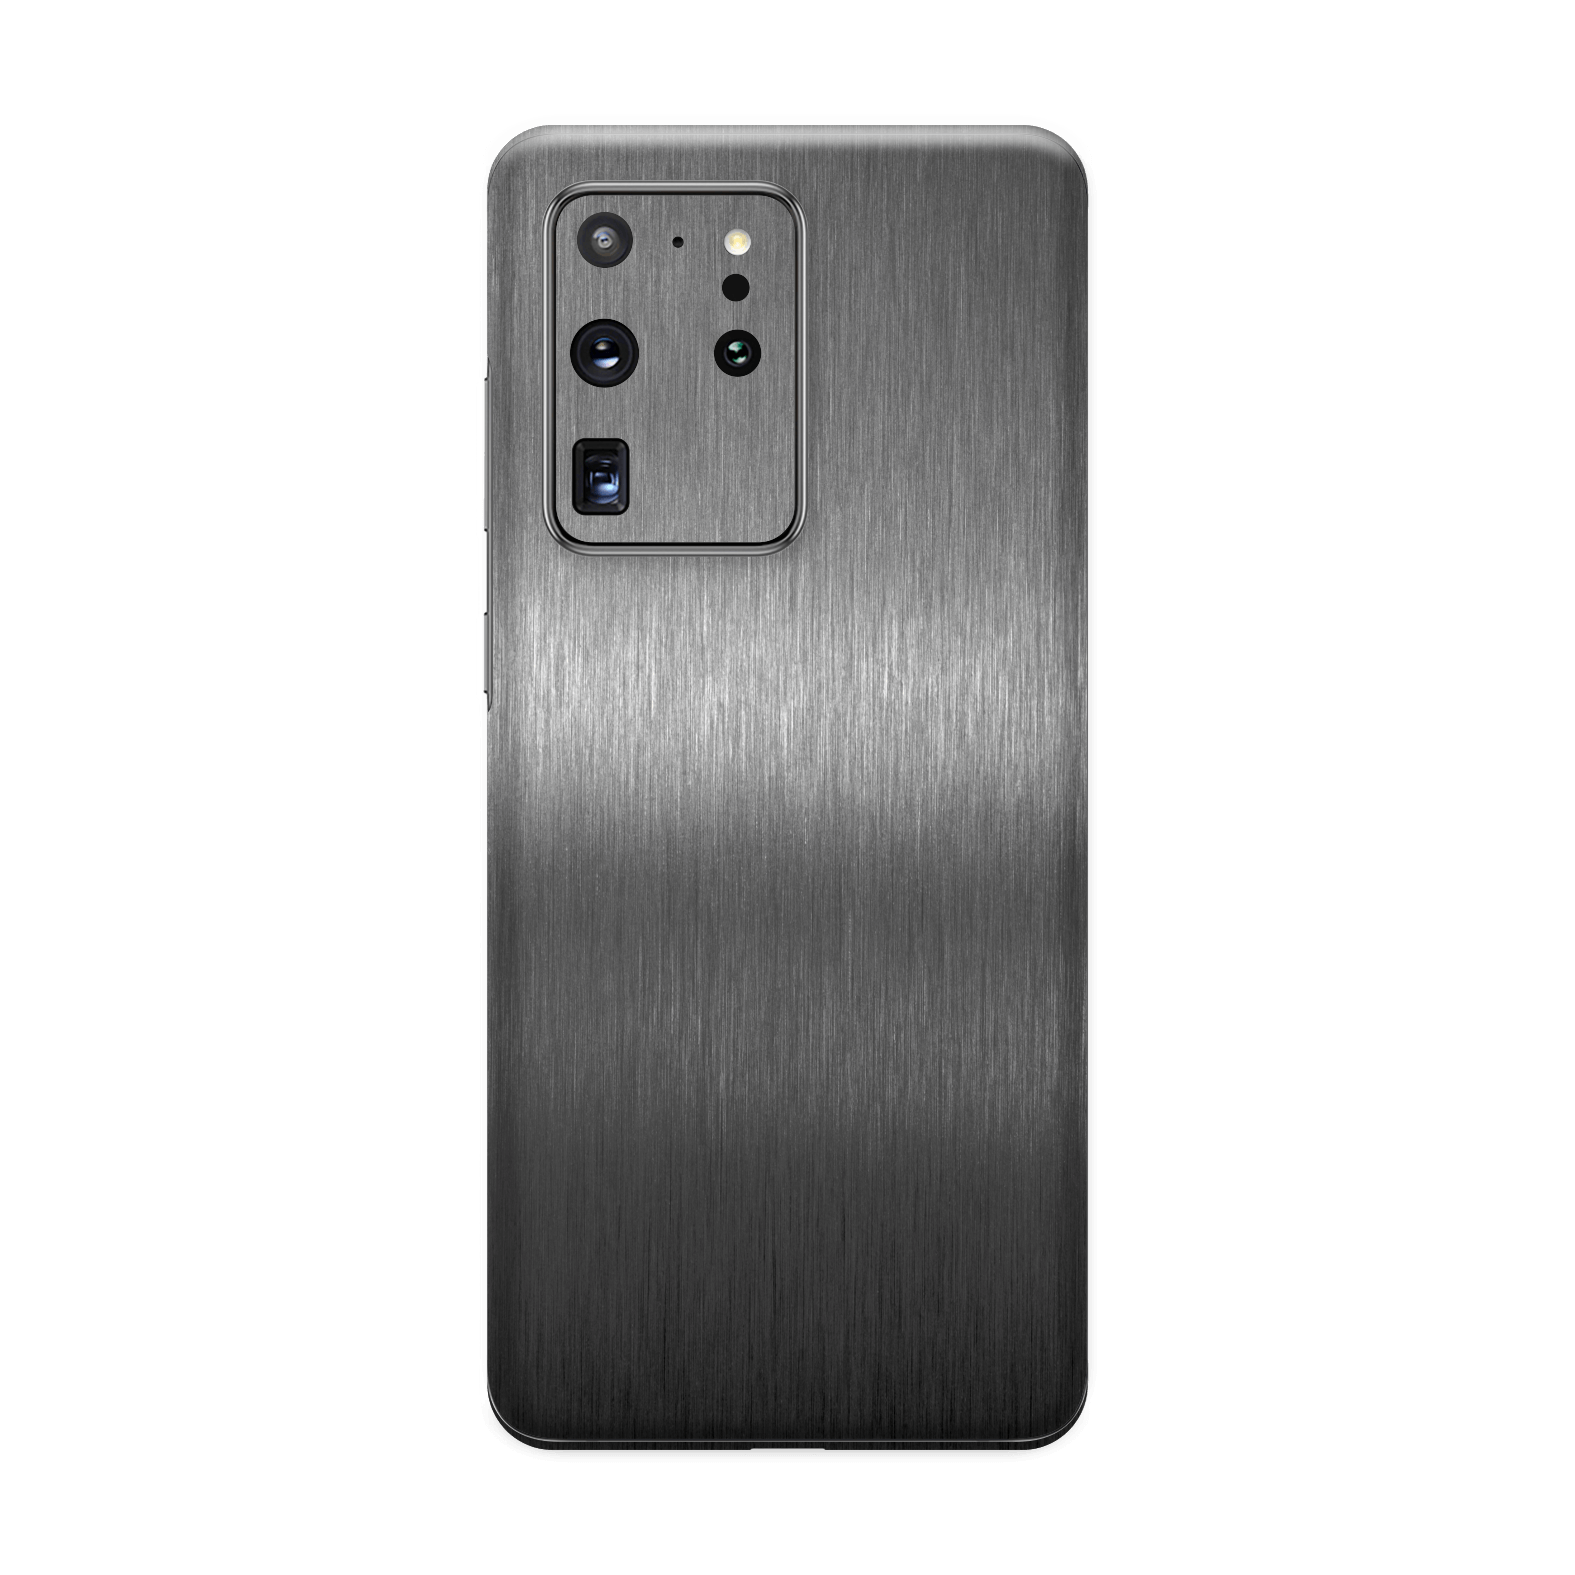 Samsung Galaxy S20 ULTRA Brushed Metal Titanium Metallic Skin Wrap Sticker Decal Cover Protector by EasySkinz | EasySkinz.com